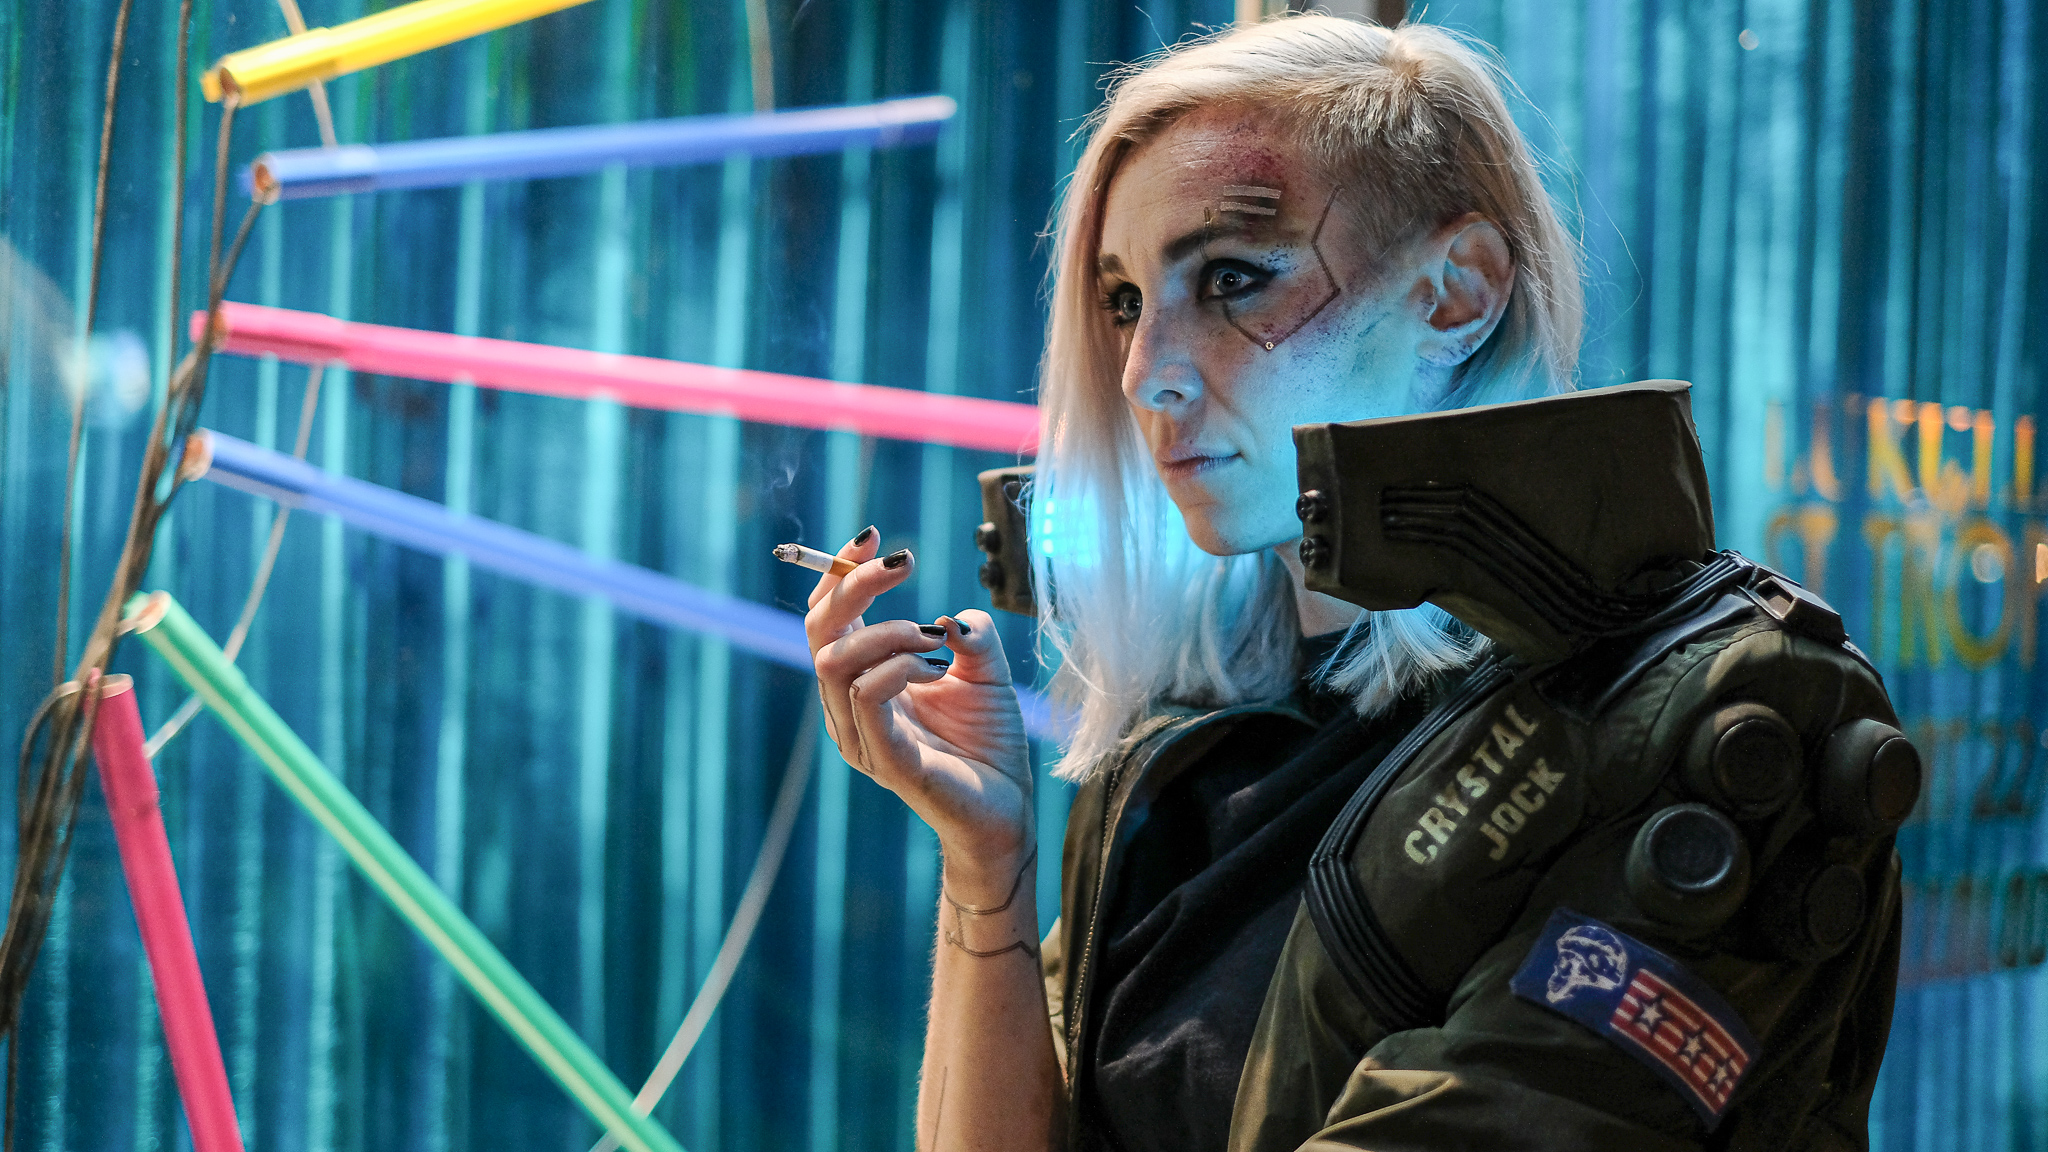 Cyberpunk 2077 - V Cosplay - Alzbeta Trojanova smoking a cigarette